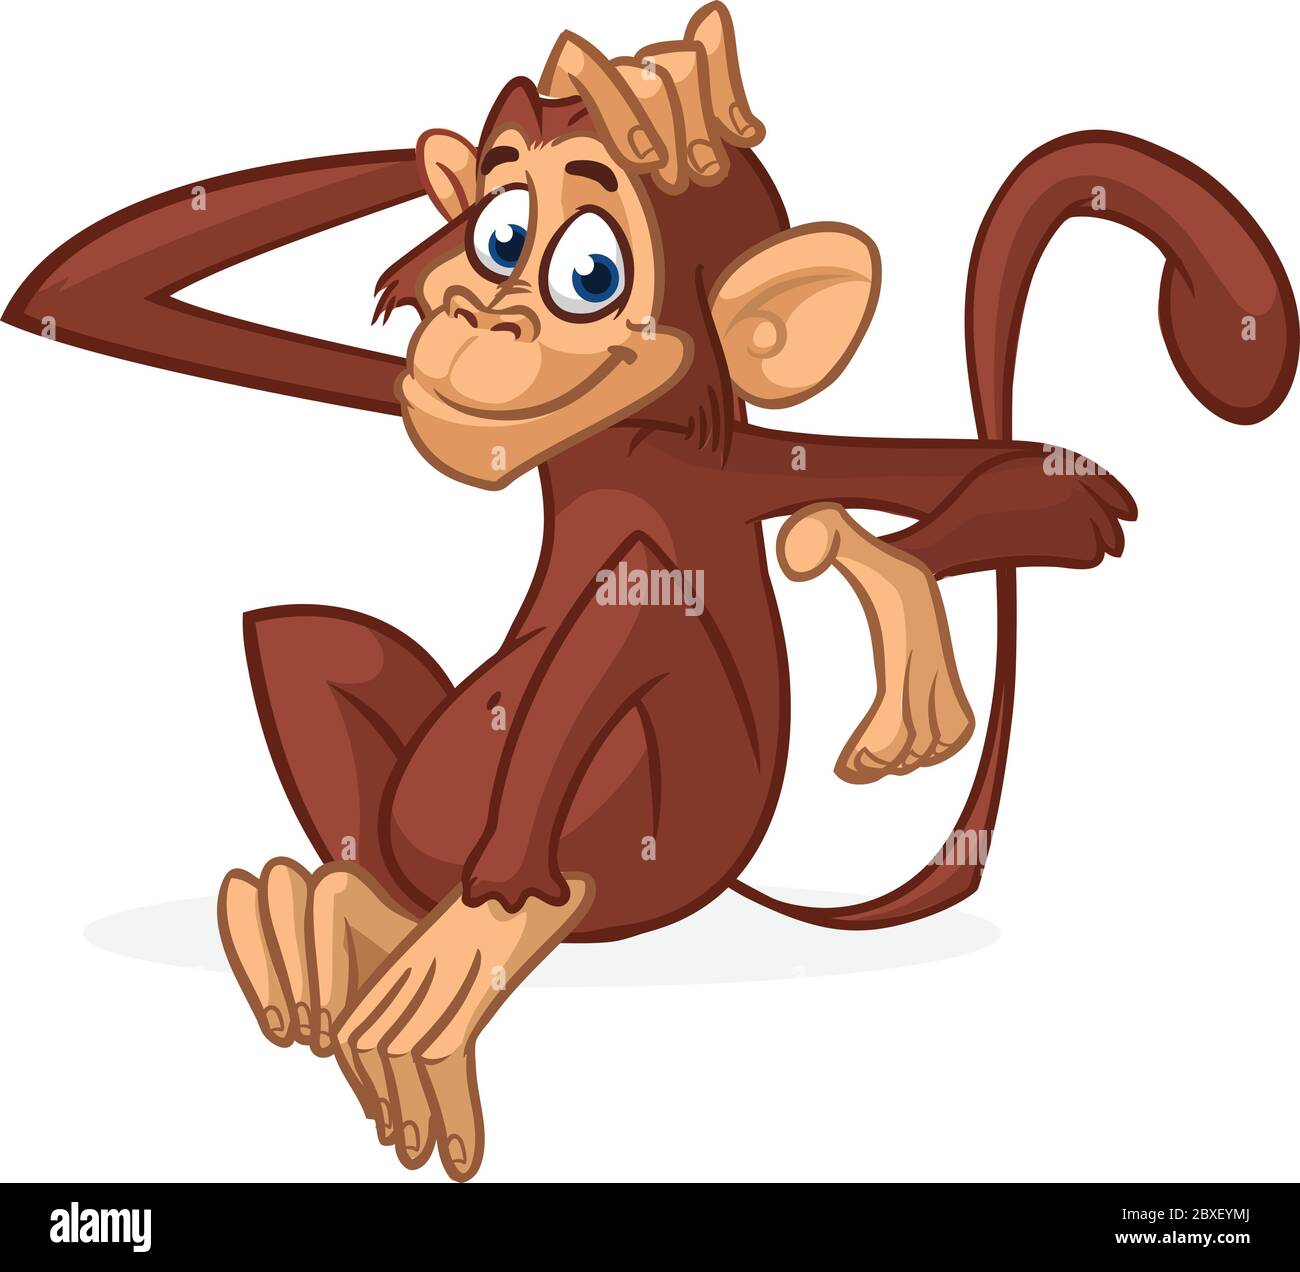 Cute cartoon monkey sitting. Vector illustration of chimpanzee ...